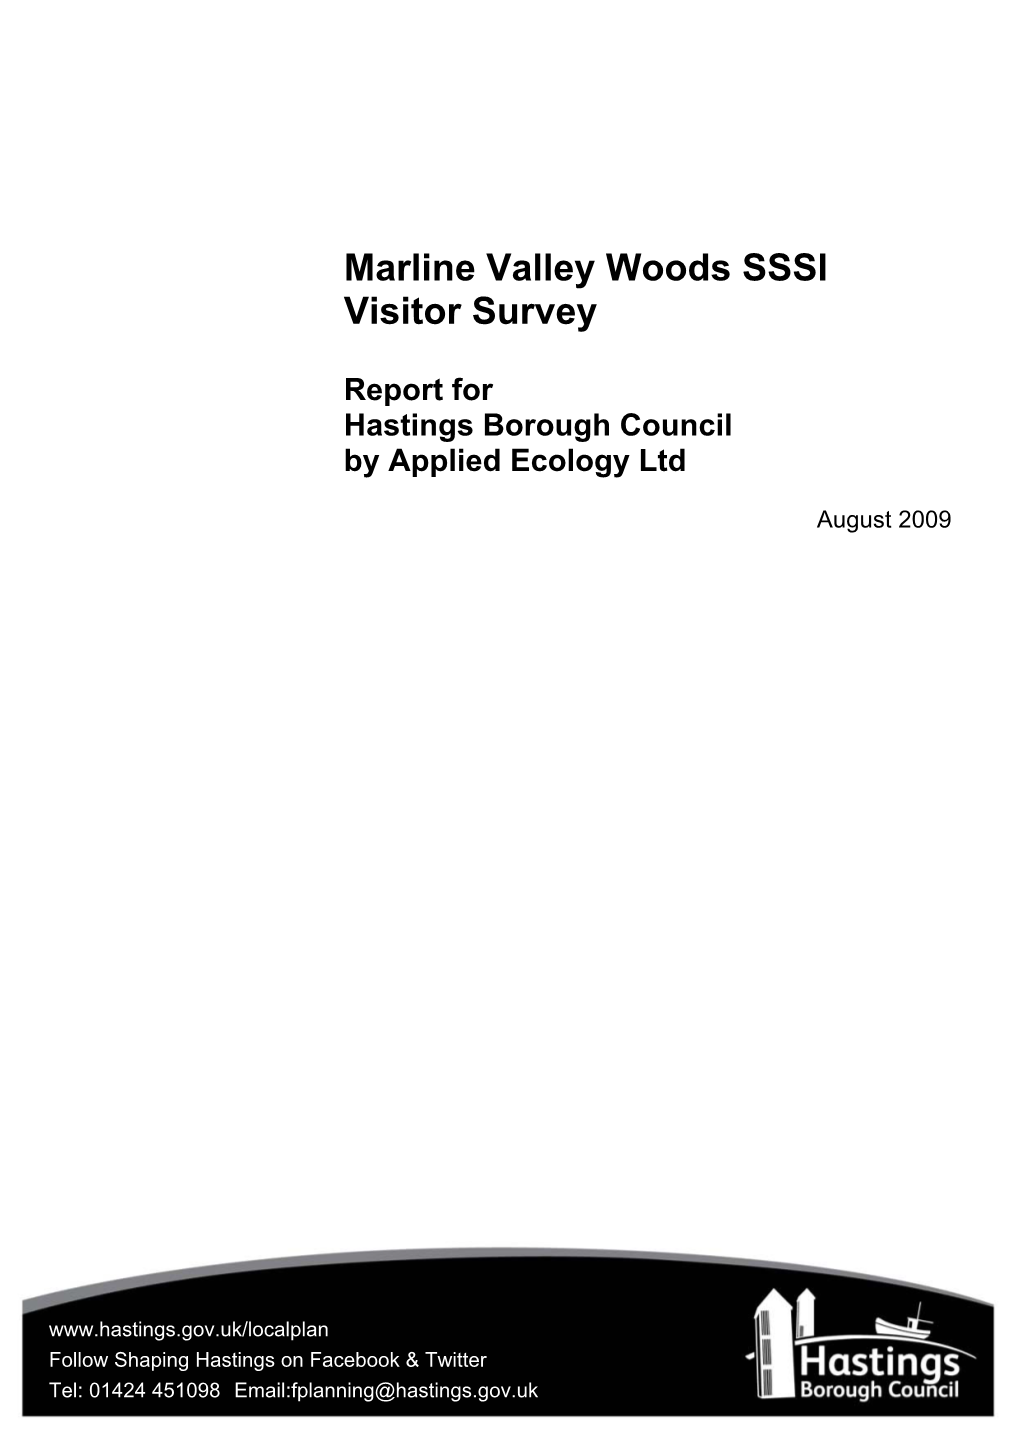 Marline Valley Wood Visitor Survey